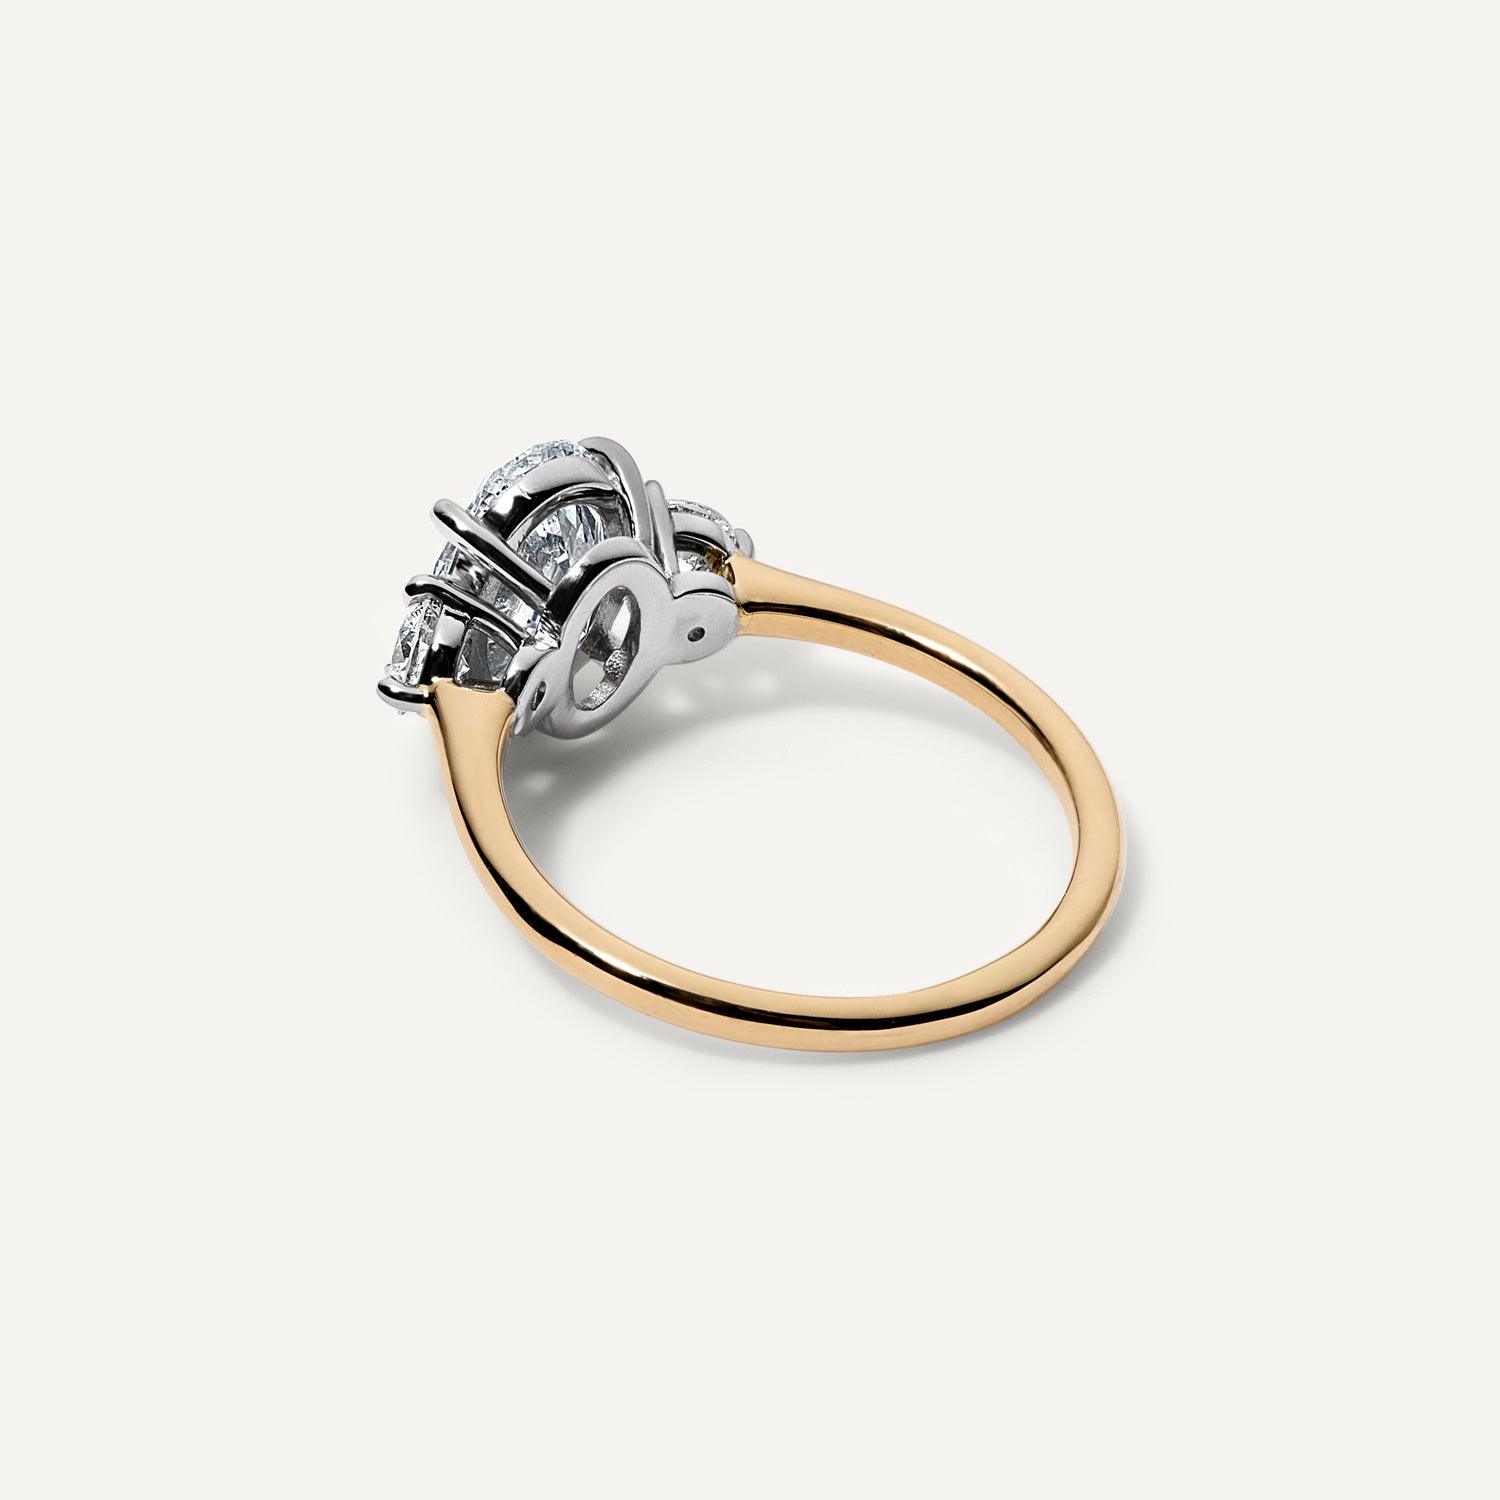 Three stone oval lab diamond engagement ring.